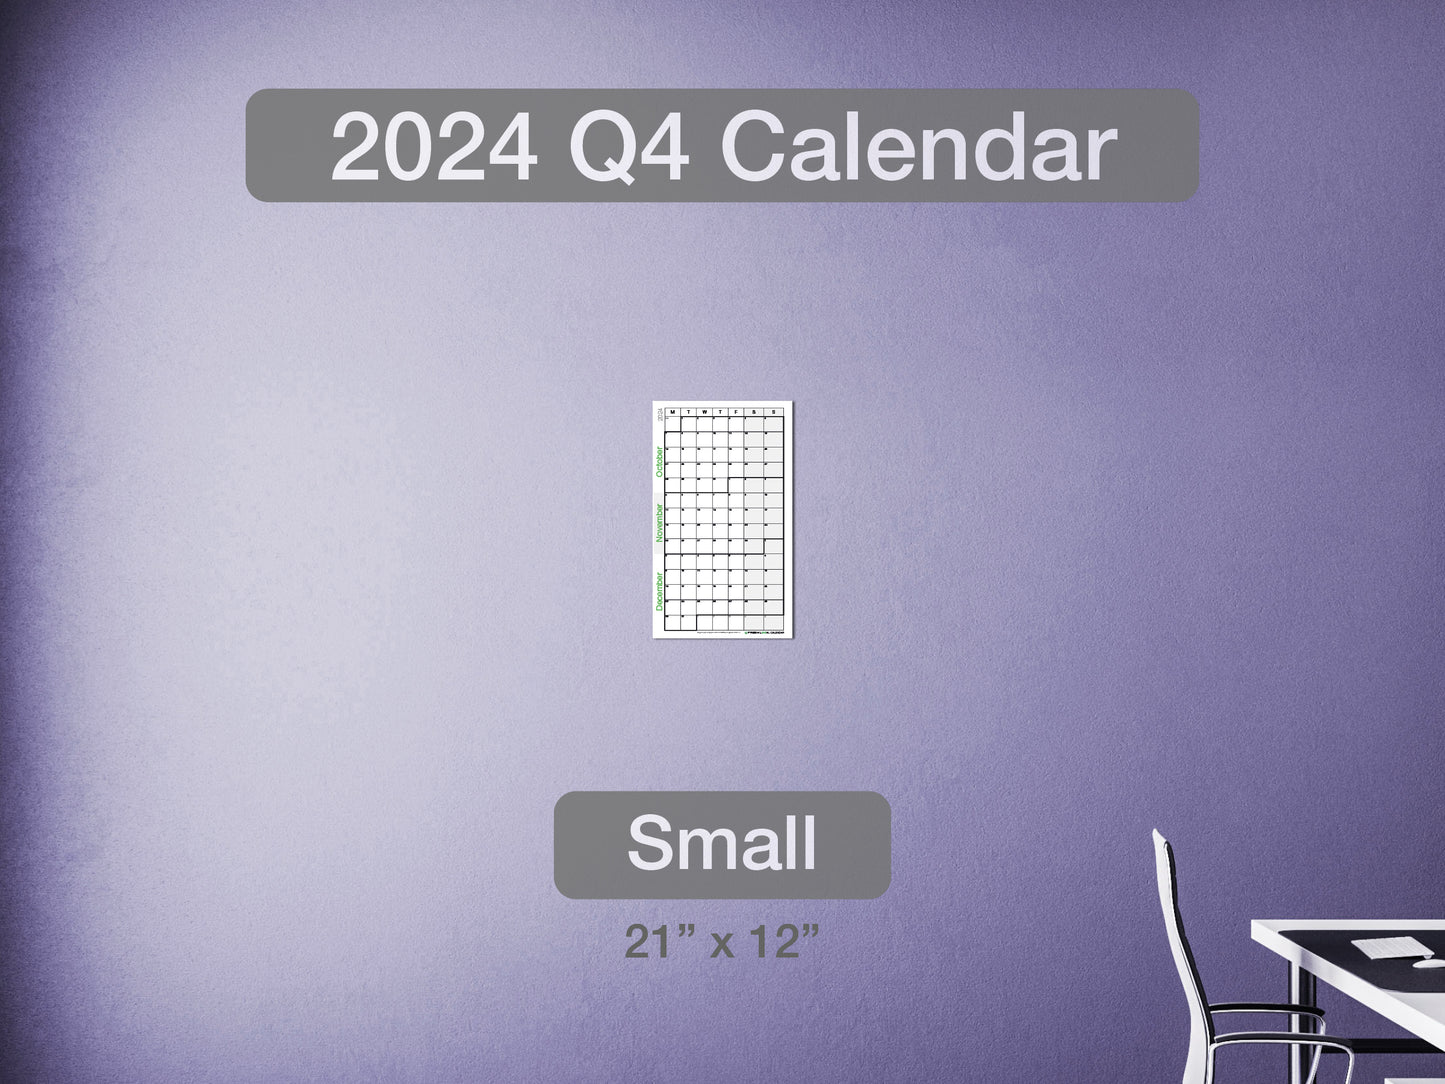 2024 Q4 Calendar Small